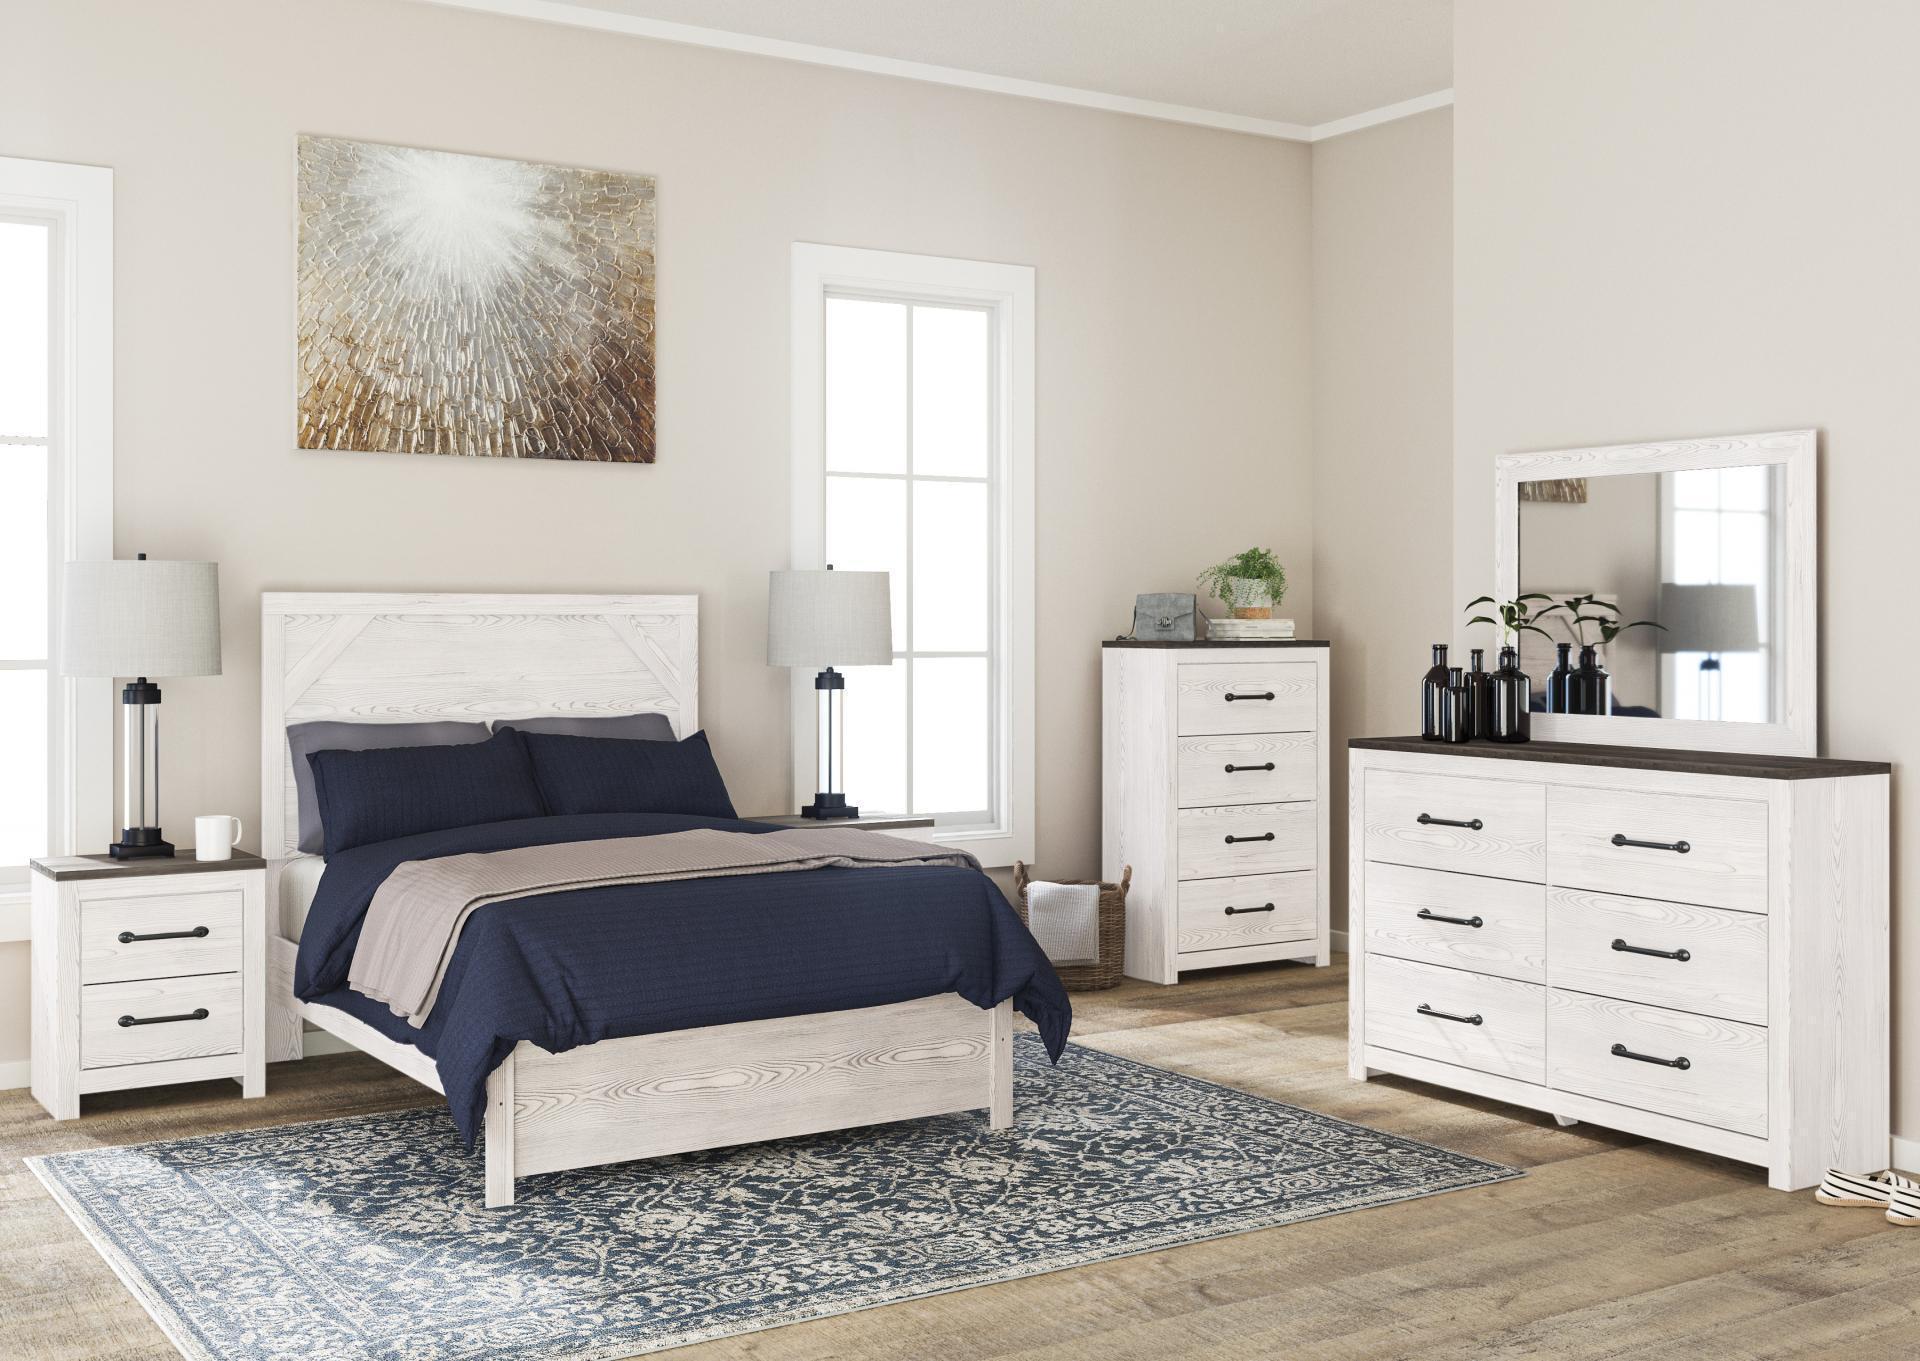 White Gerridan Queen Panel Bed w/ Chest, Nightstand, Dresser & Mirror,In-Store Product